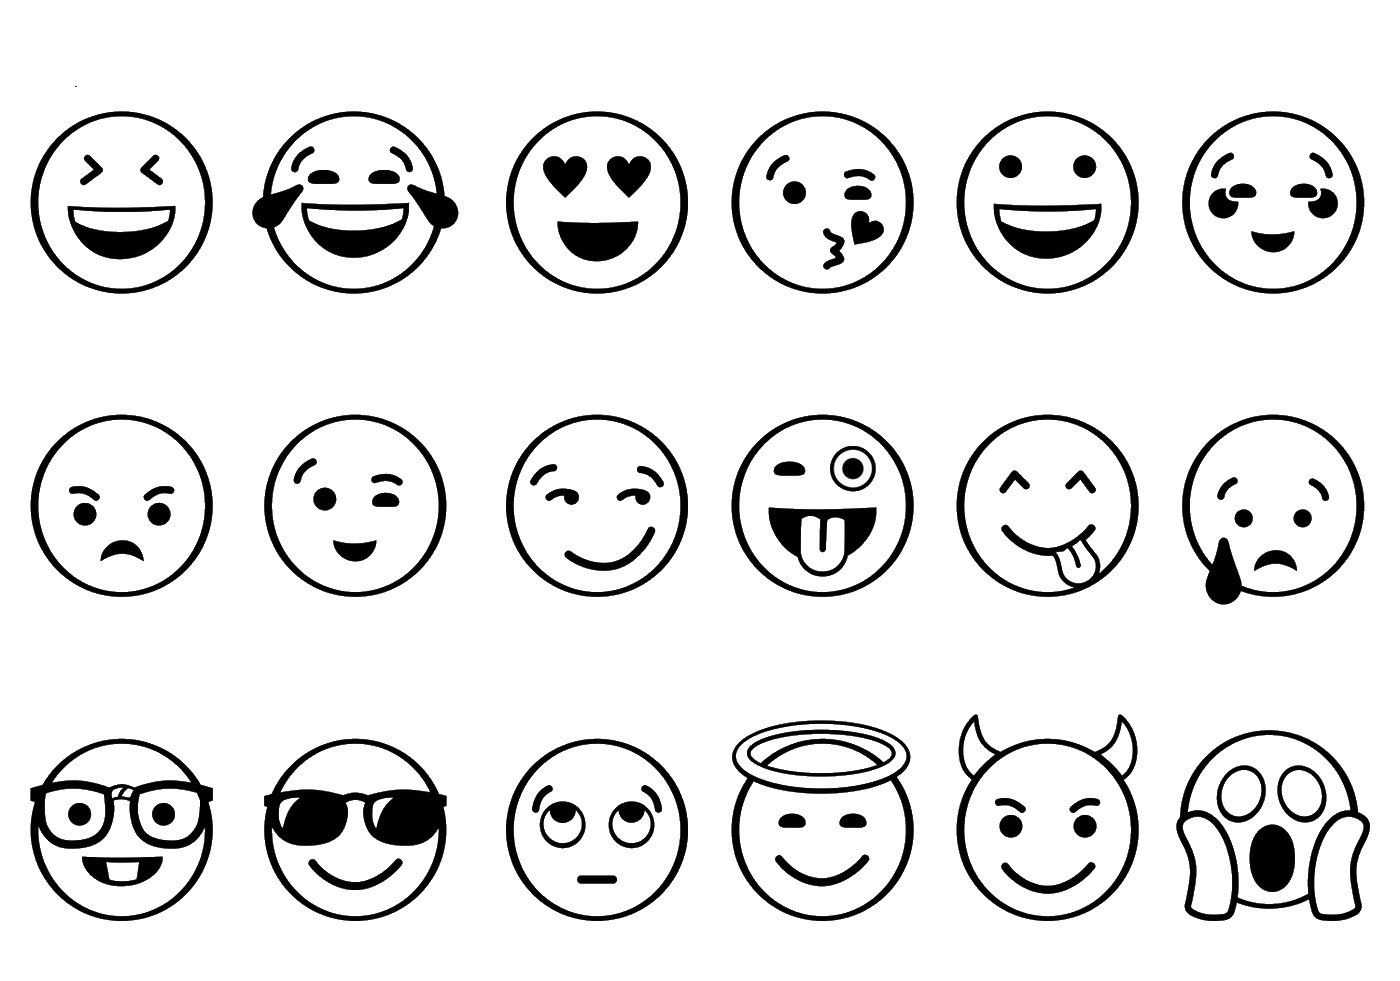 Free Printable Emoji Coloring Pages
 Emoji Coloring Pages